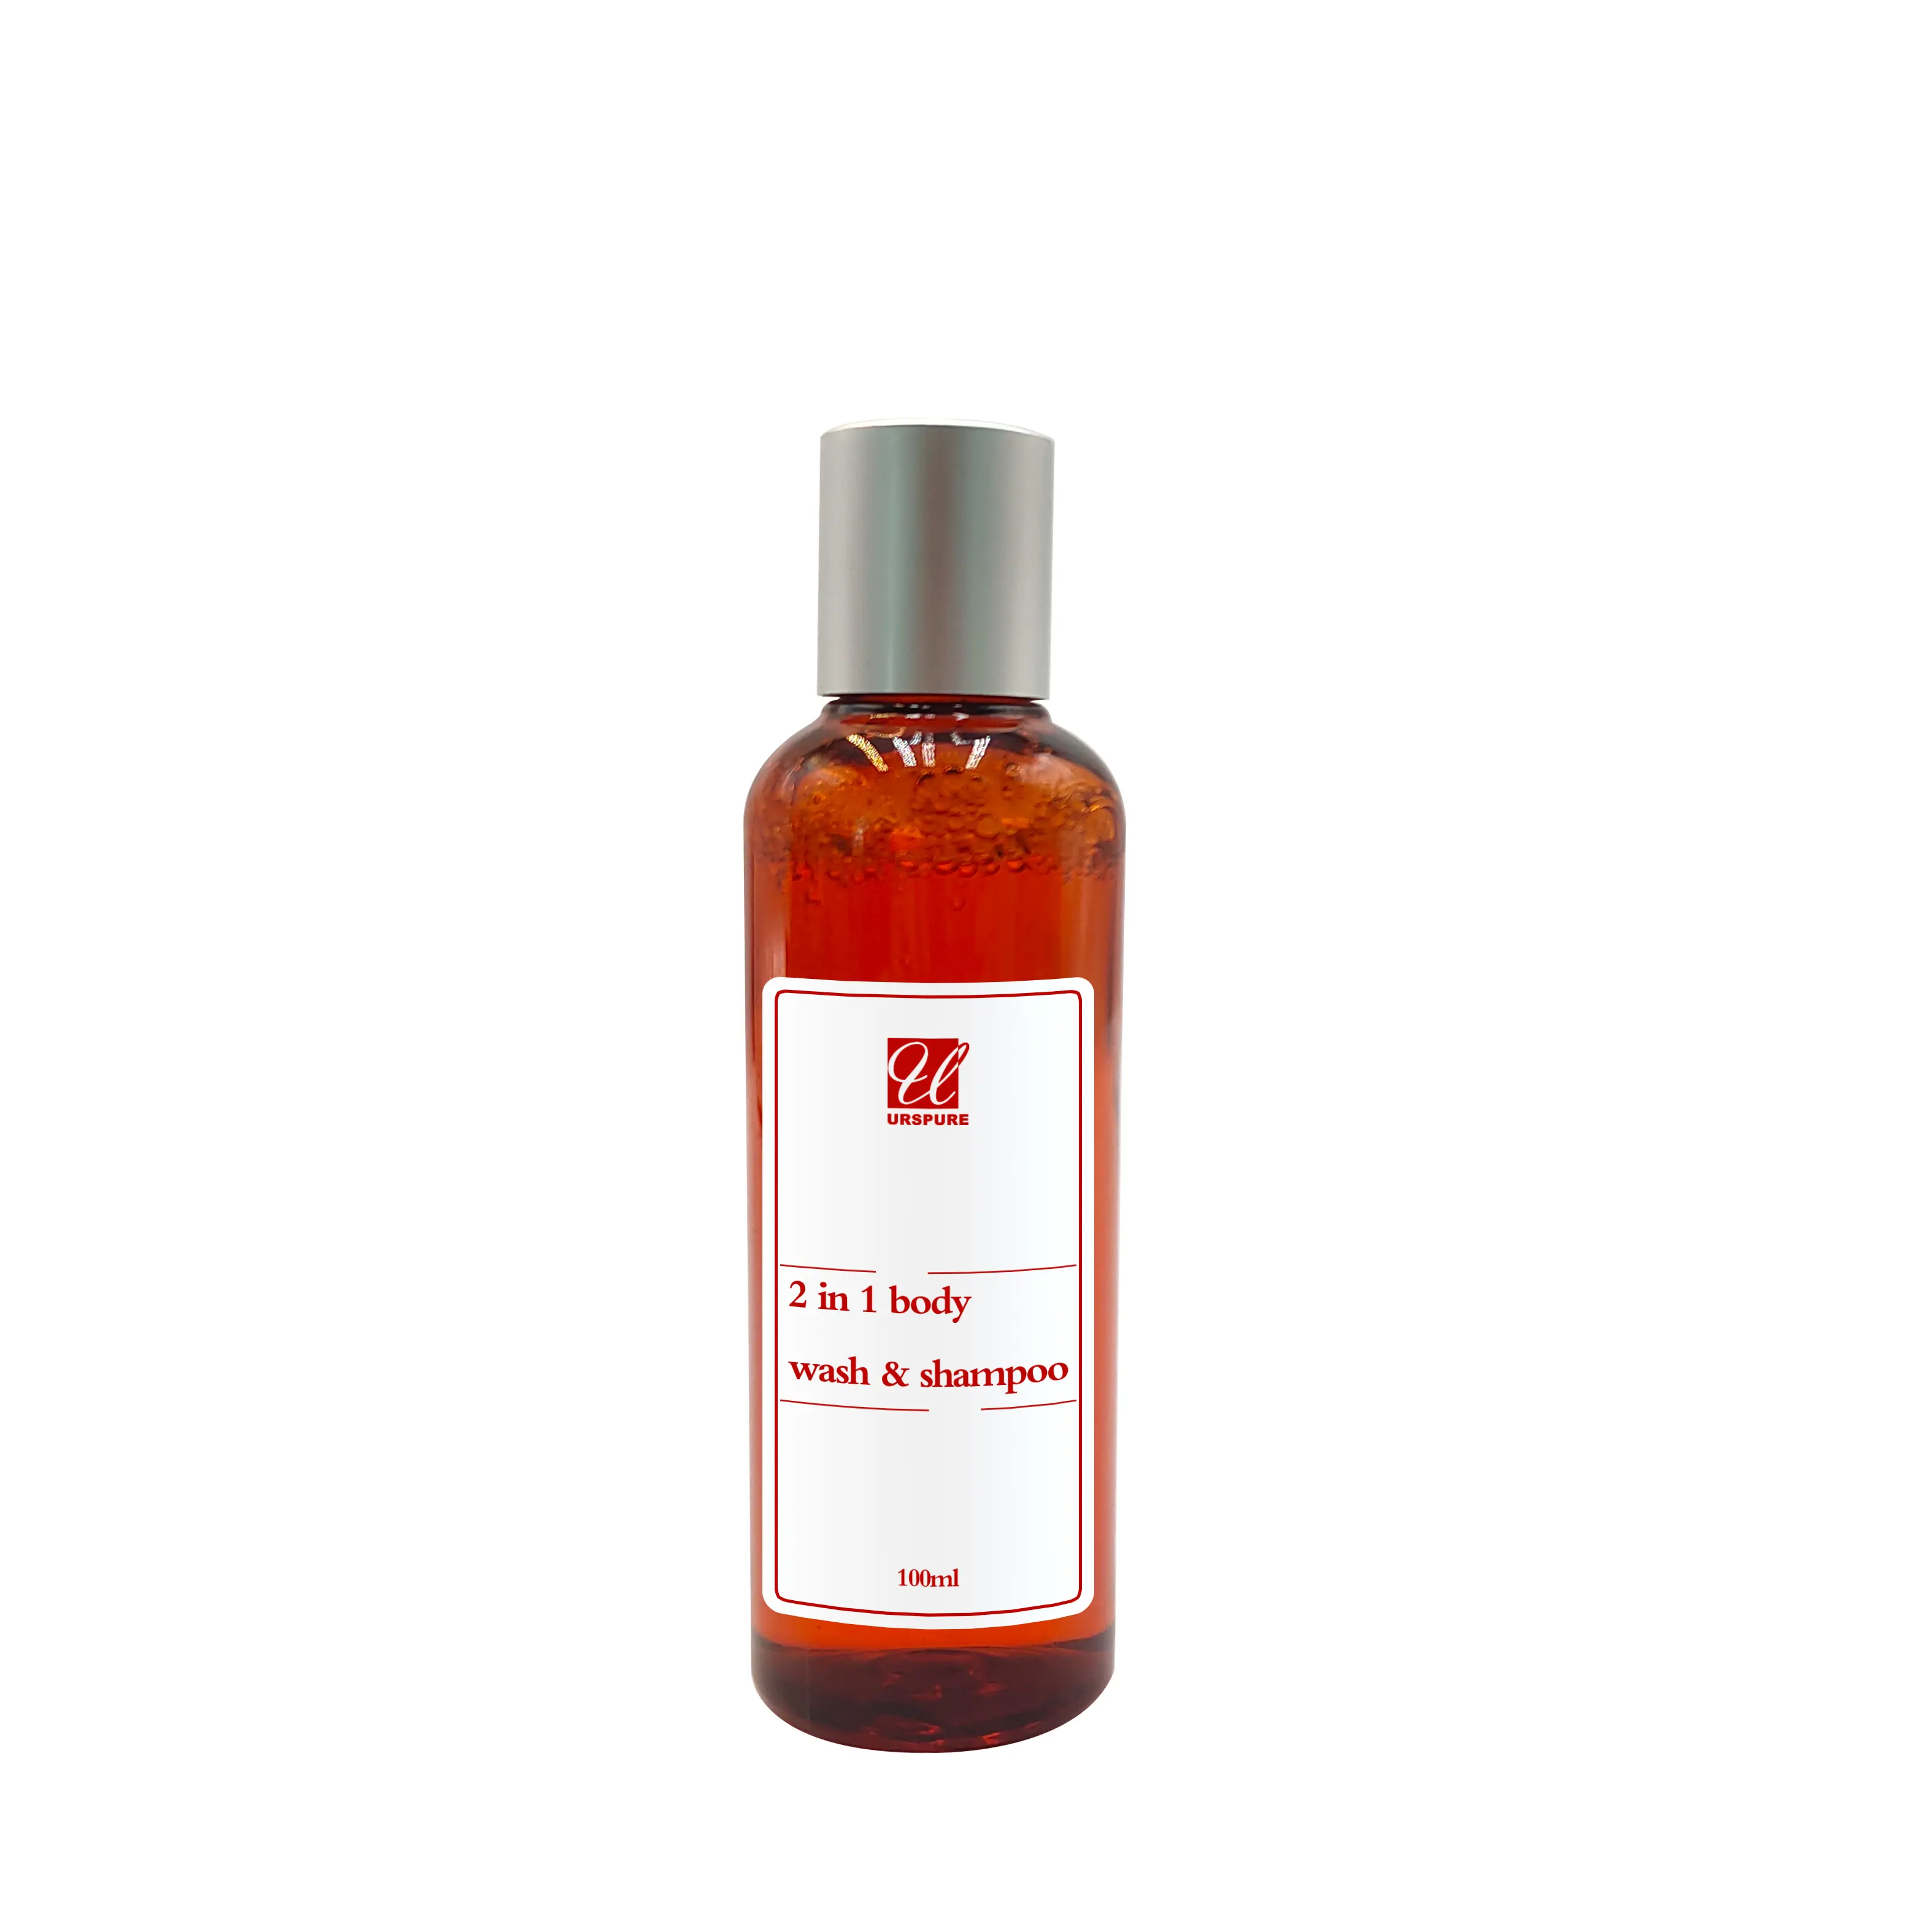 Shampoo Shower Gel 2 In 1 Herbal Natural Organic Liquid Body Wash